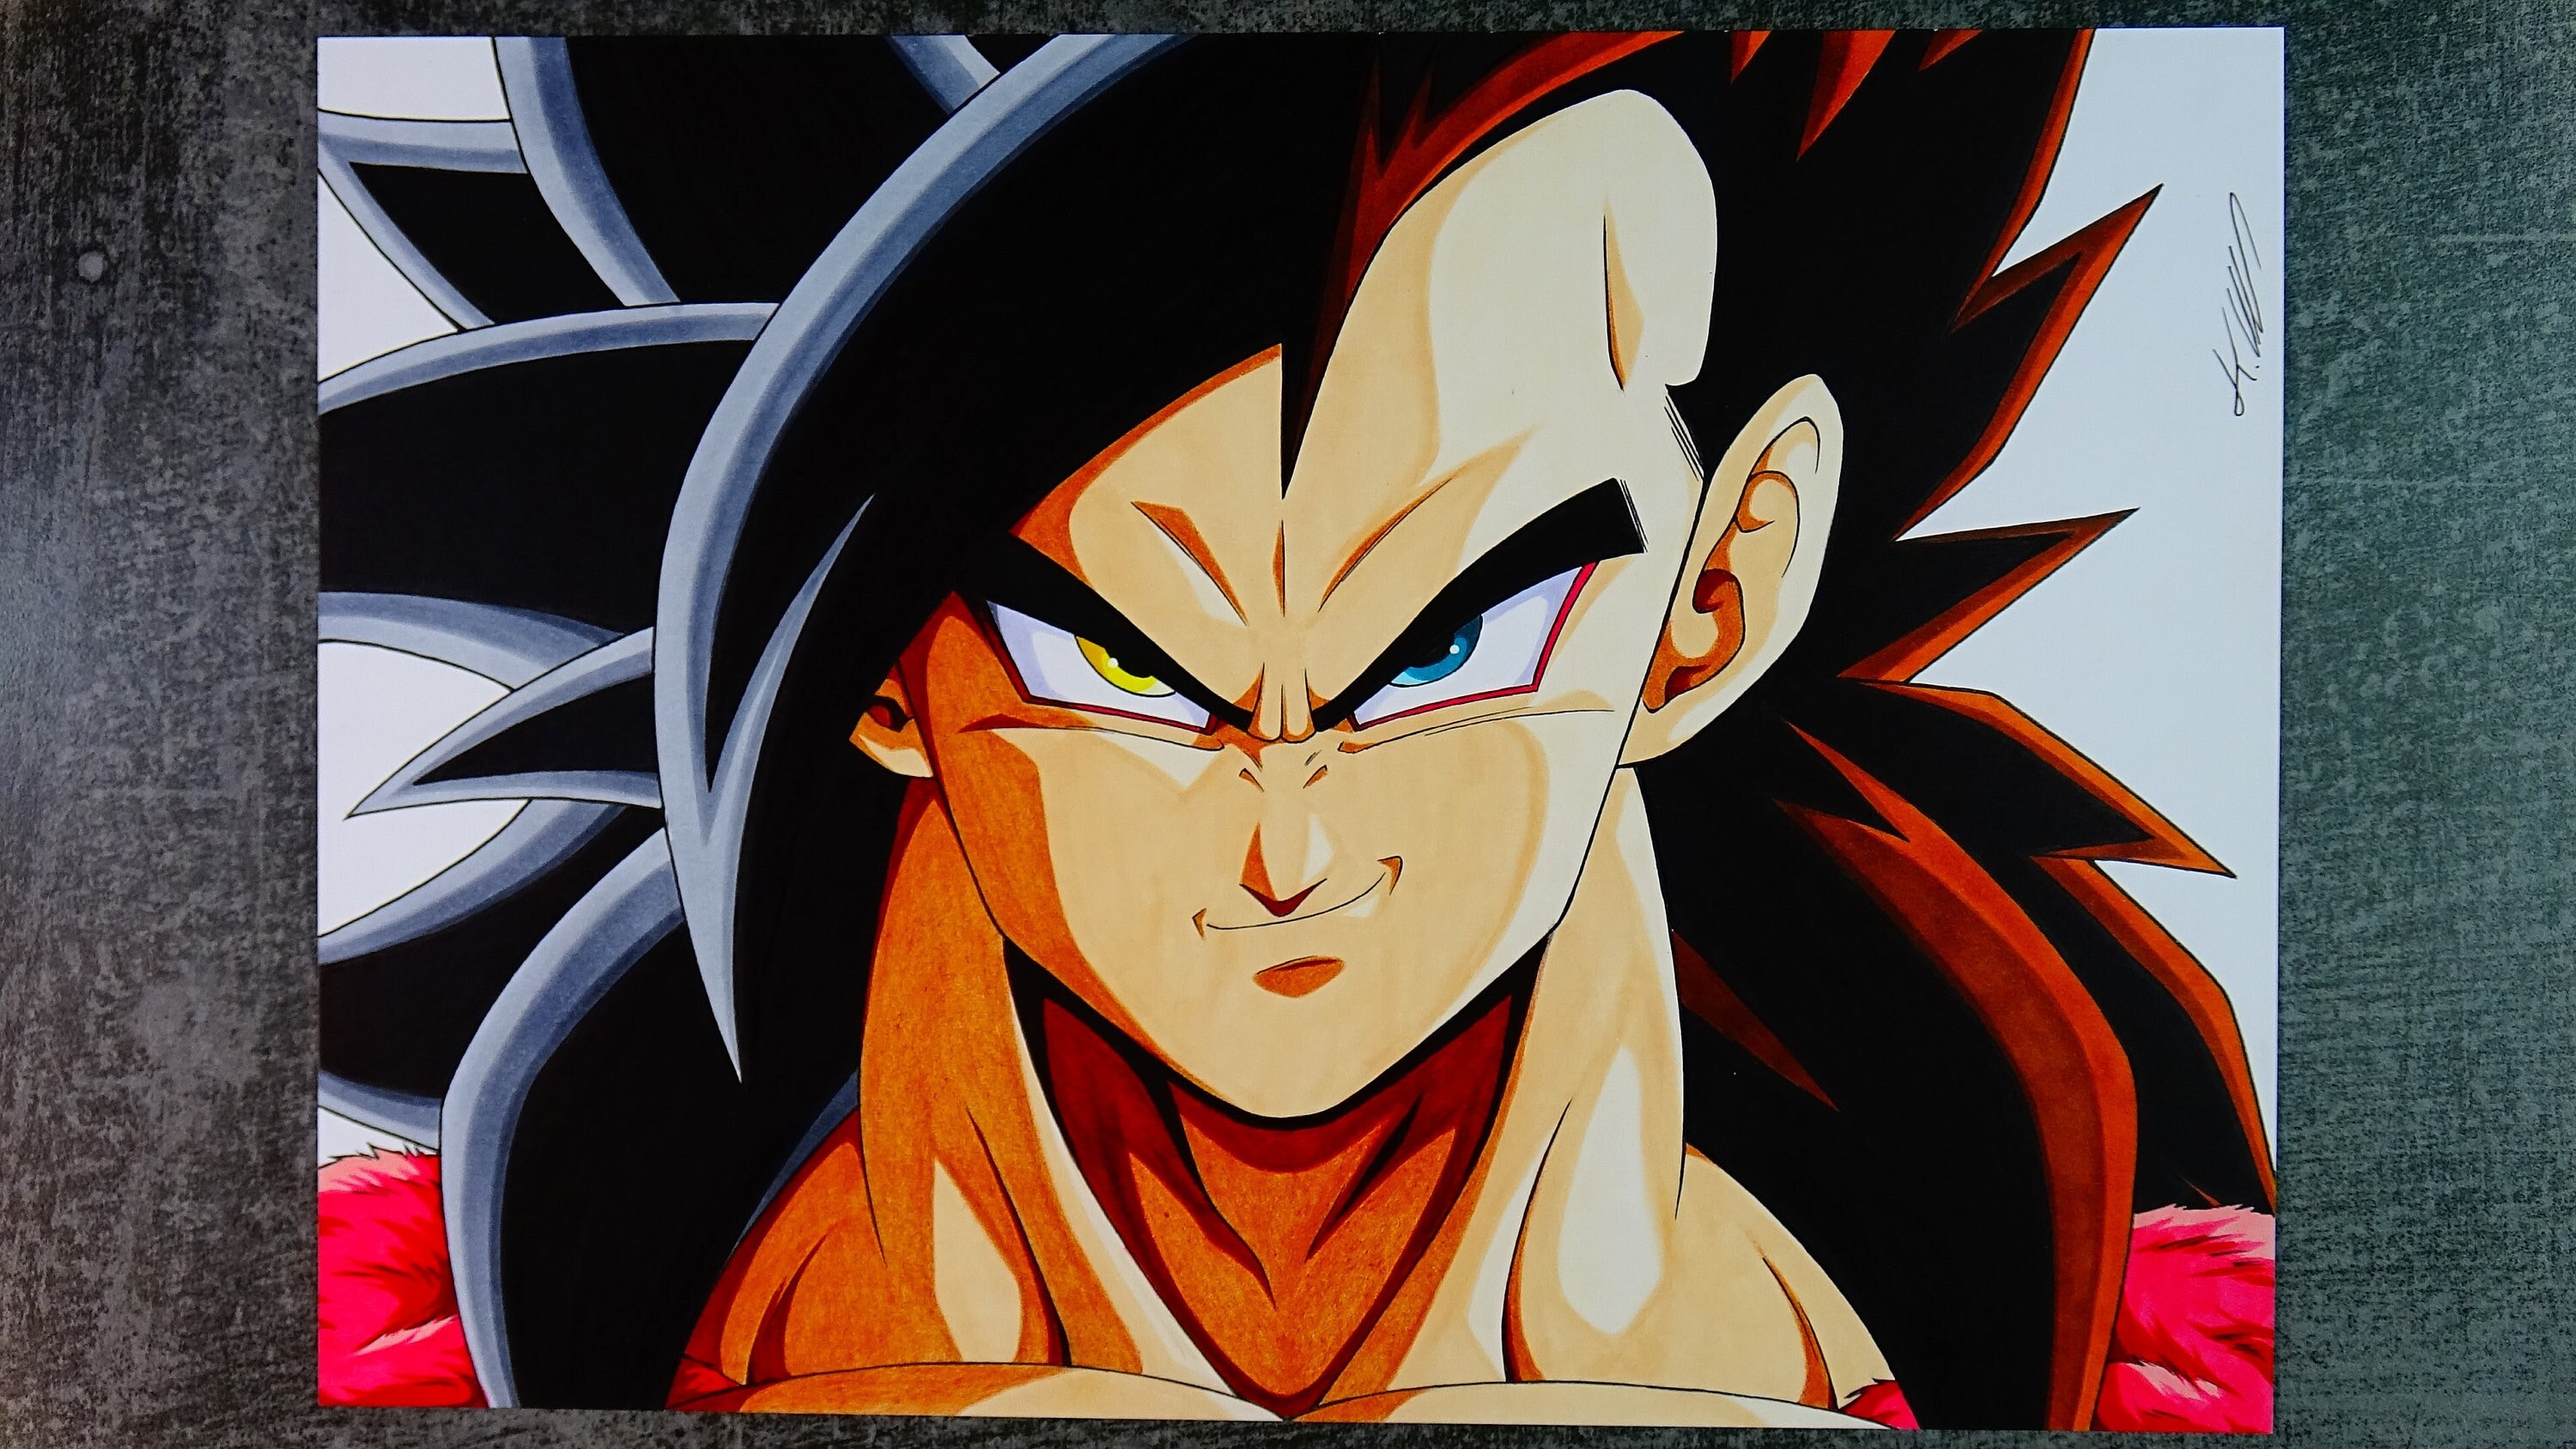 Goku SS4 and Goku Ultra Instinct (Split Drawing) by Lucas-Card on